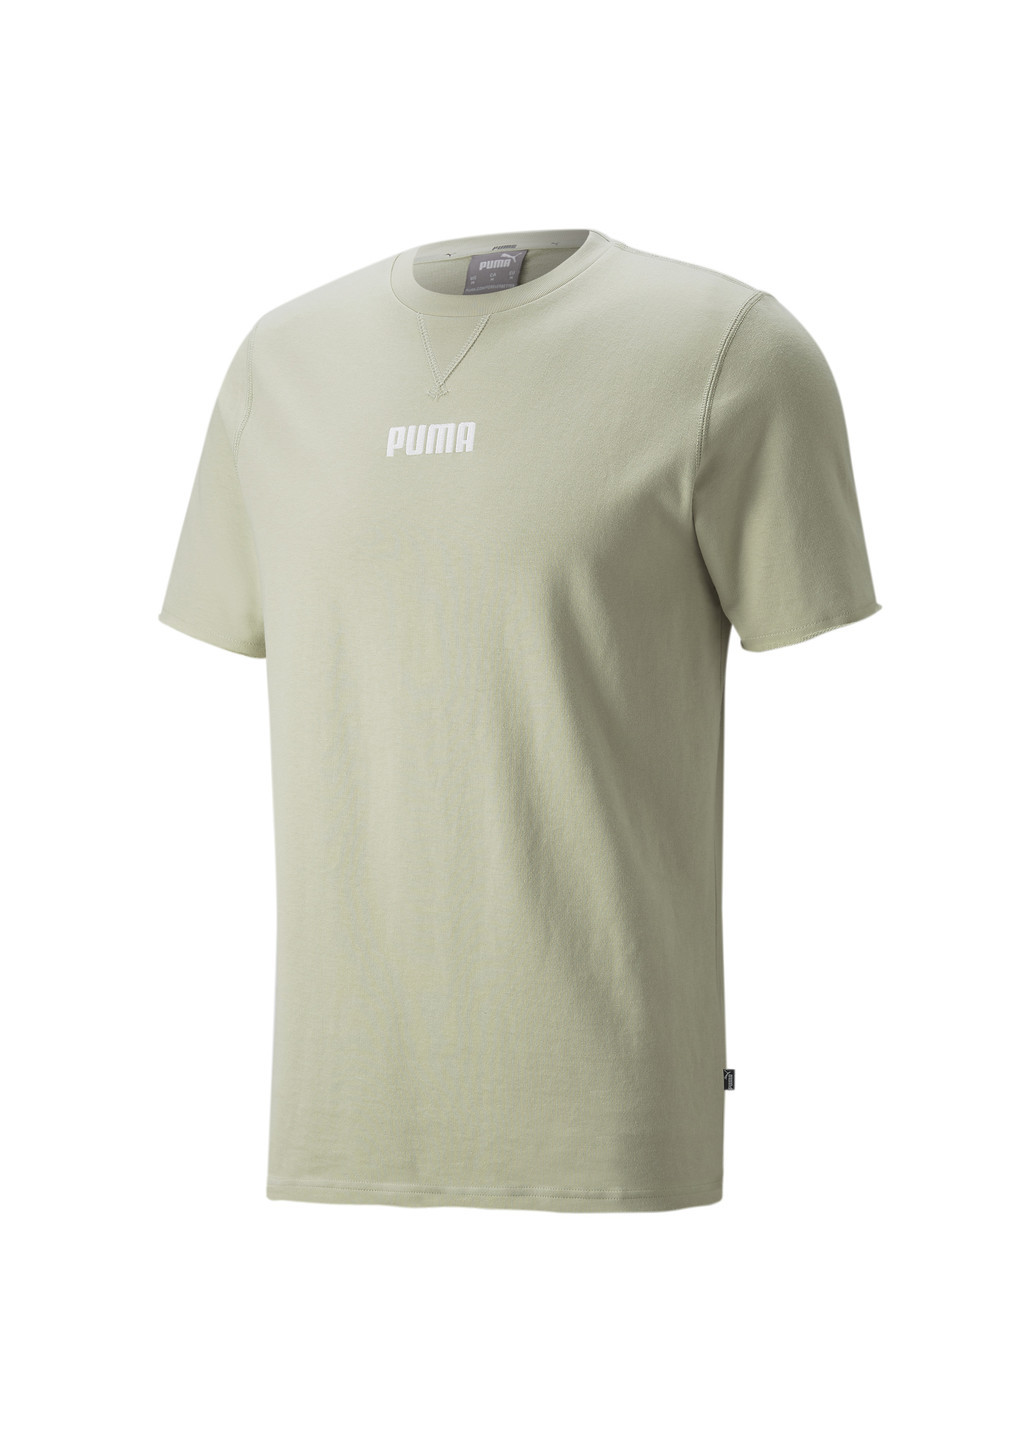 Зеленая демисезонная футболка modern basics baby terry men's tee Puma